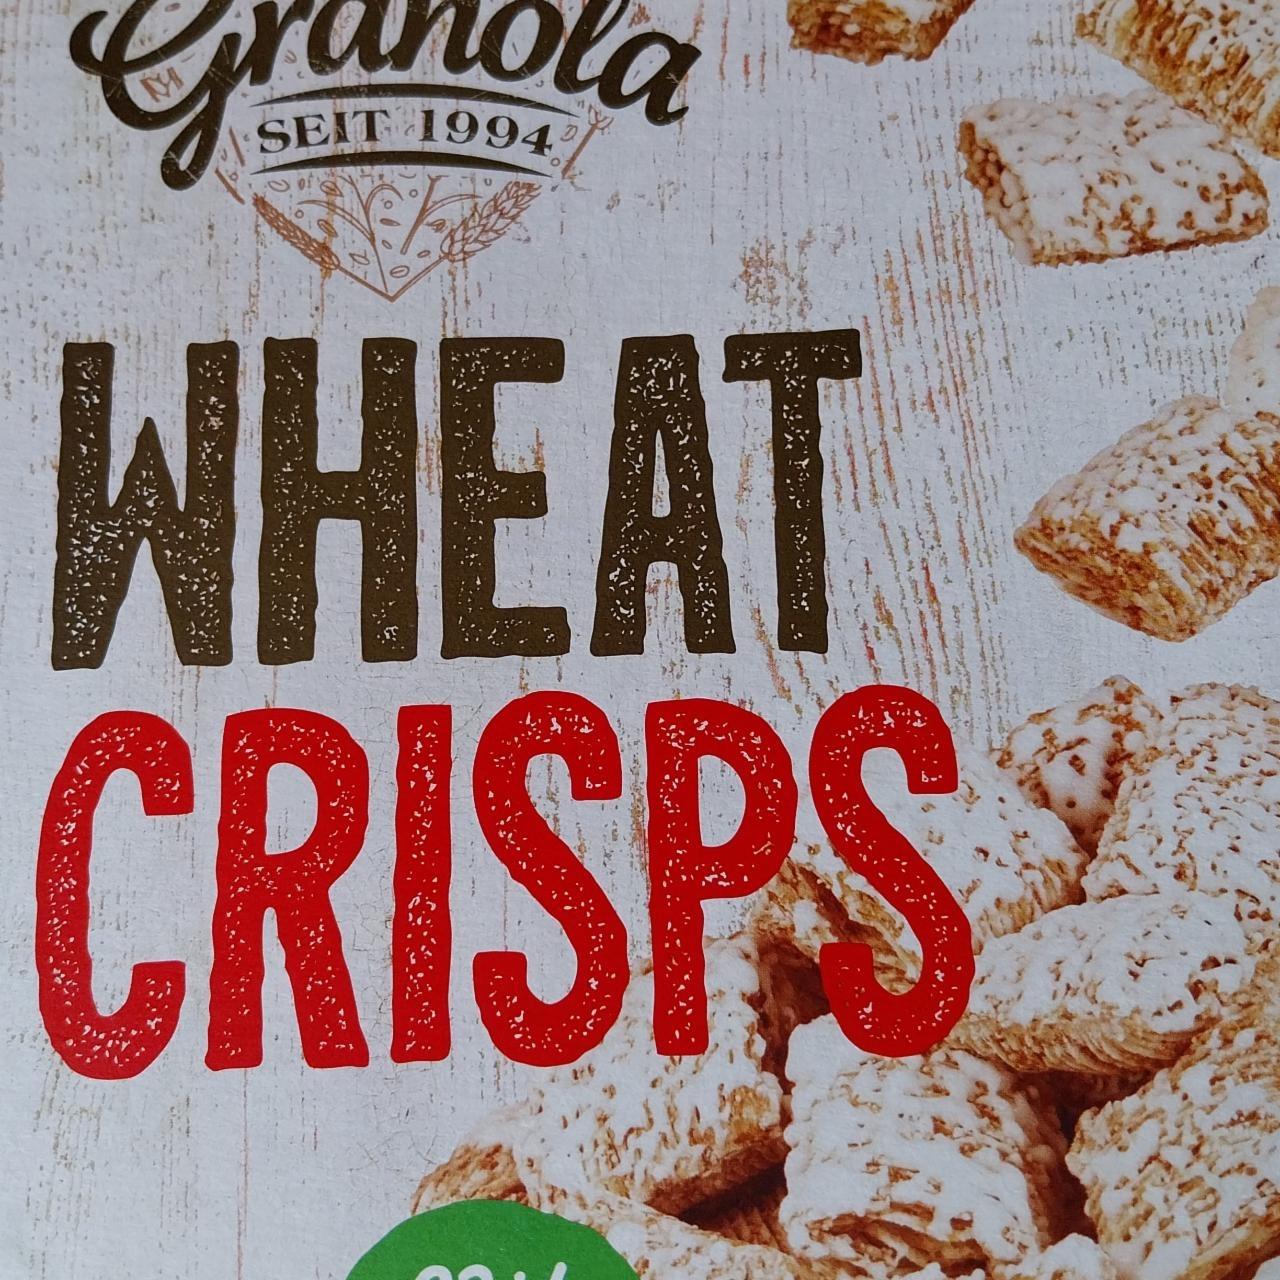 Képek - Wheat crisps Granola